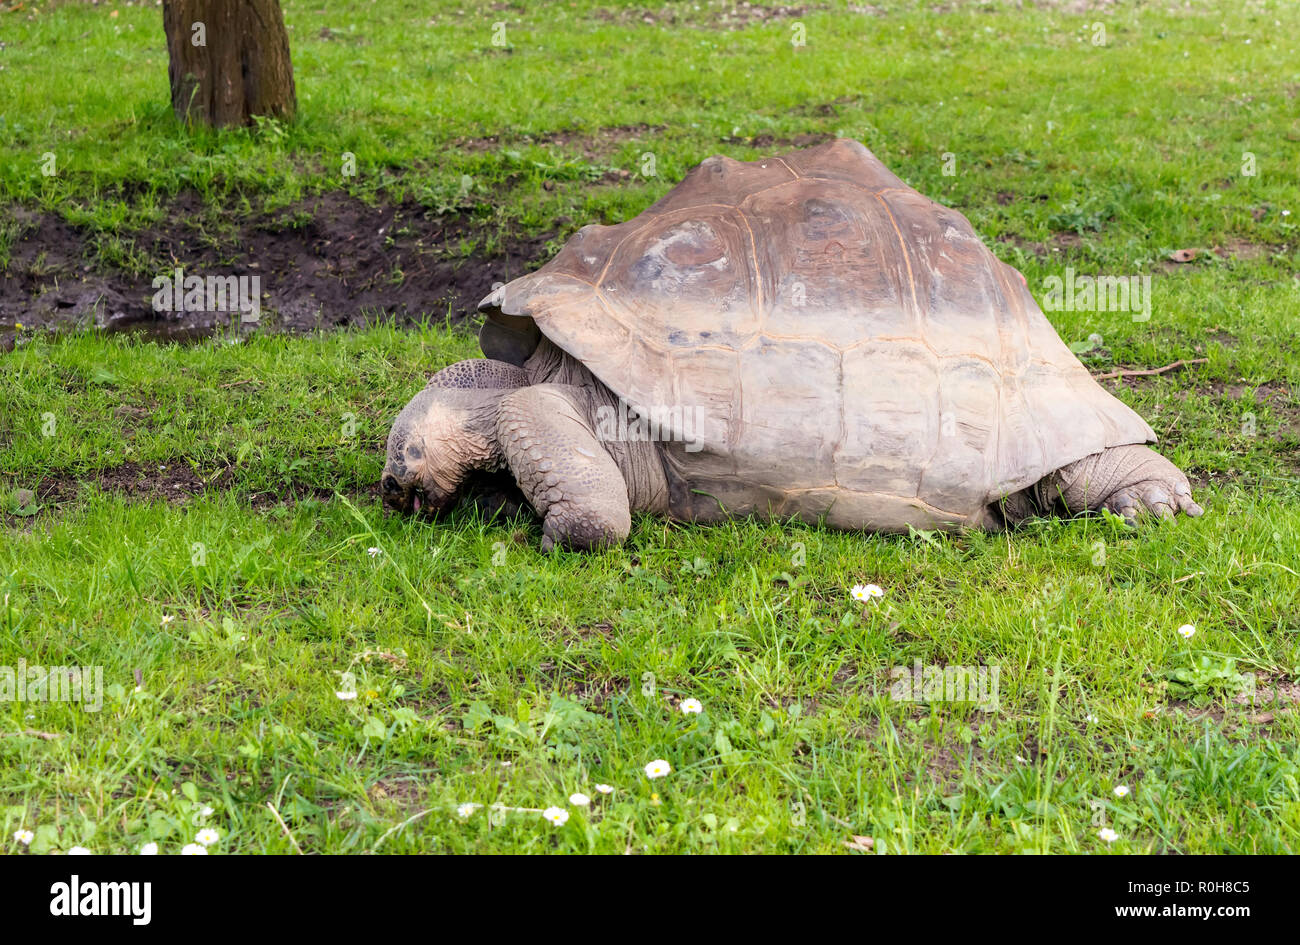 Galápagos giant tortoise (Chelonoidis nigra) eating grass. It is the largest living species of tortoise. Stock Photo